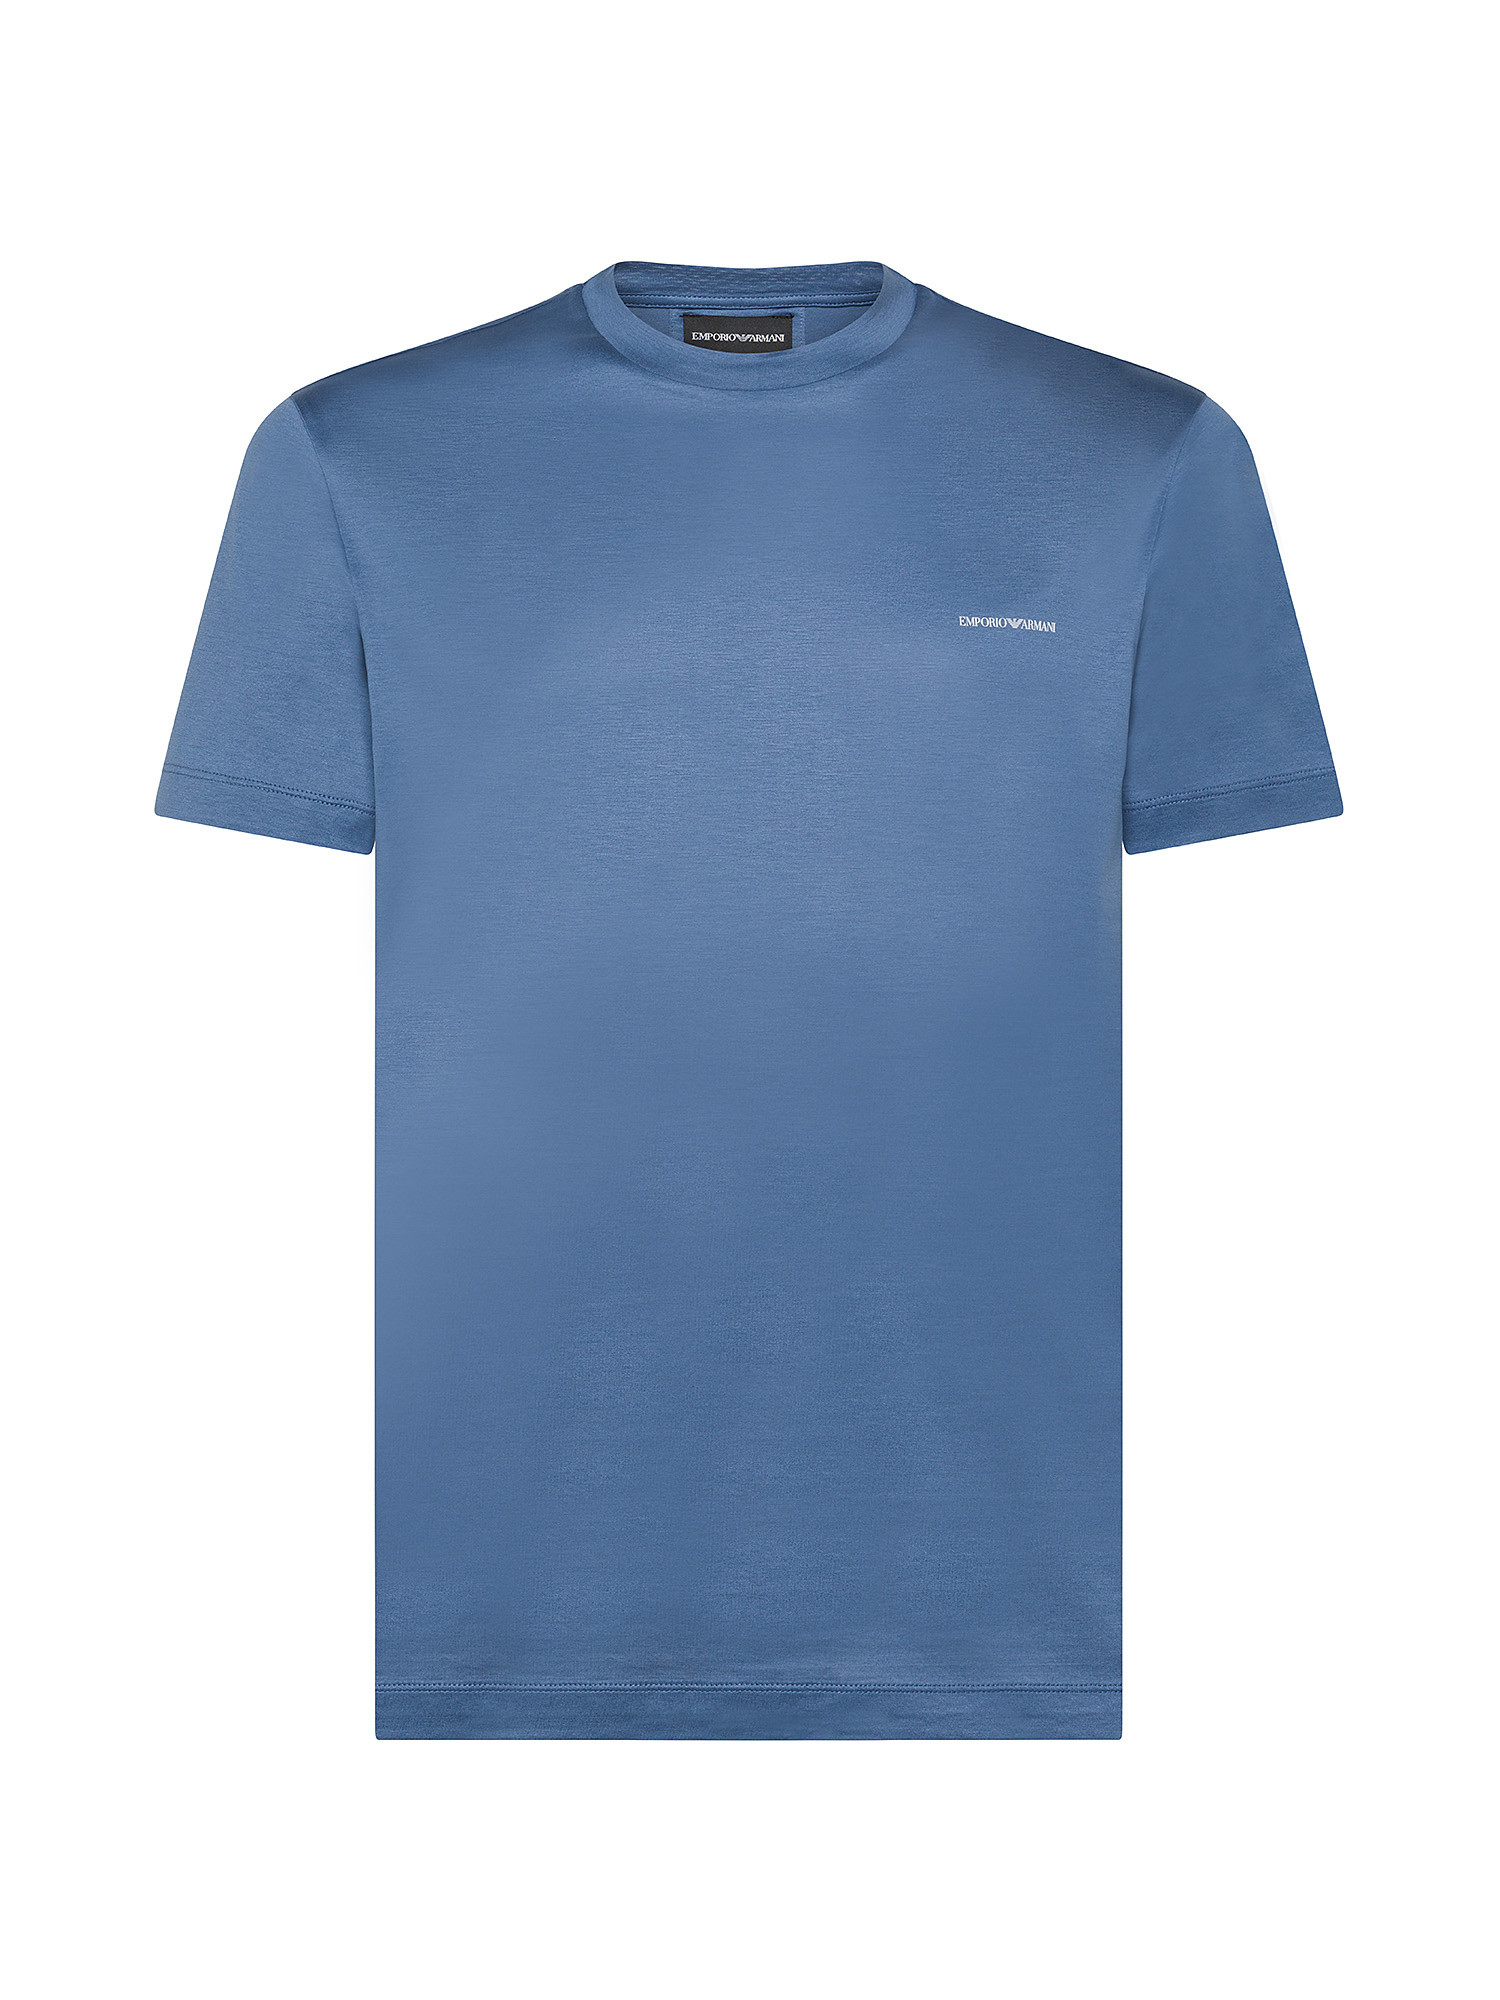 Emporio Armani - T-shirt con logo lettering, Azzurro scuro, large image number 0